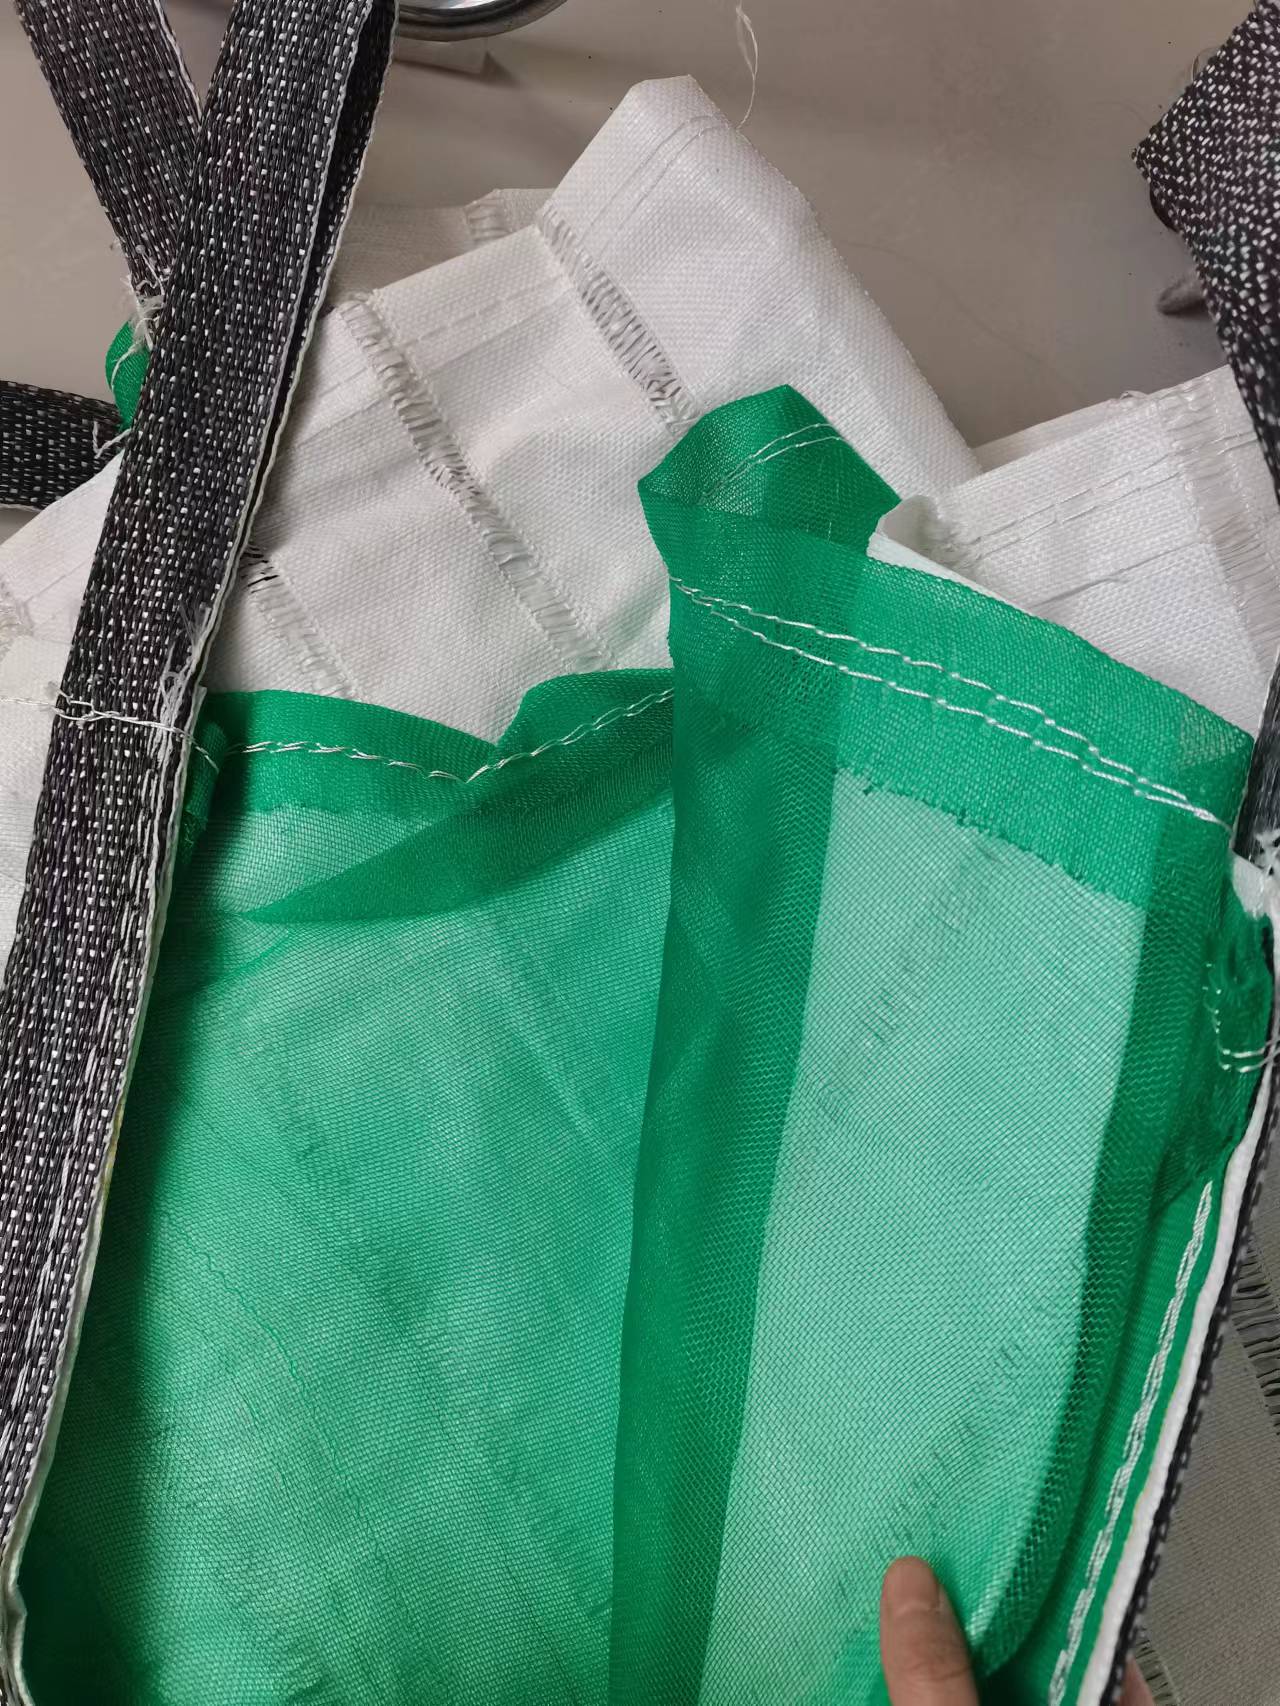 Ventilated Bulk Bags